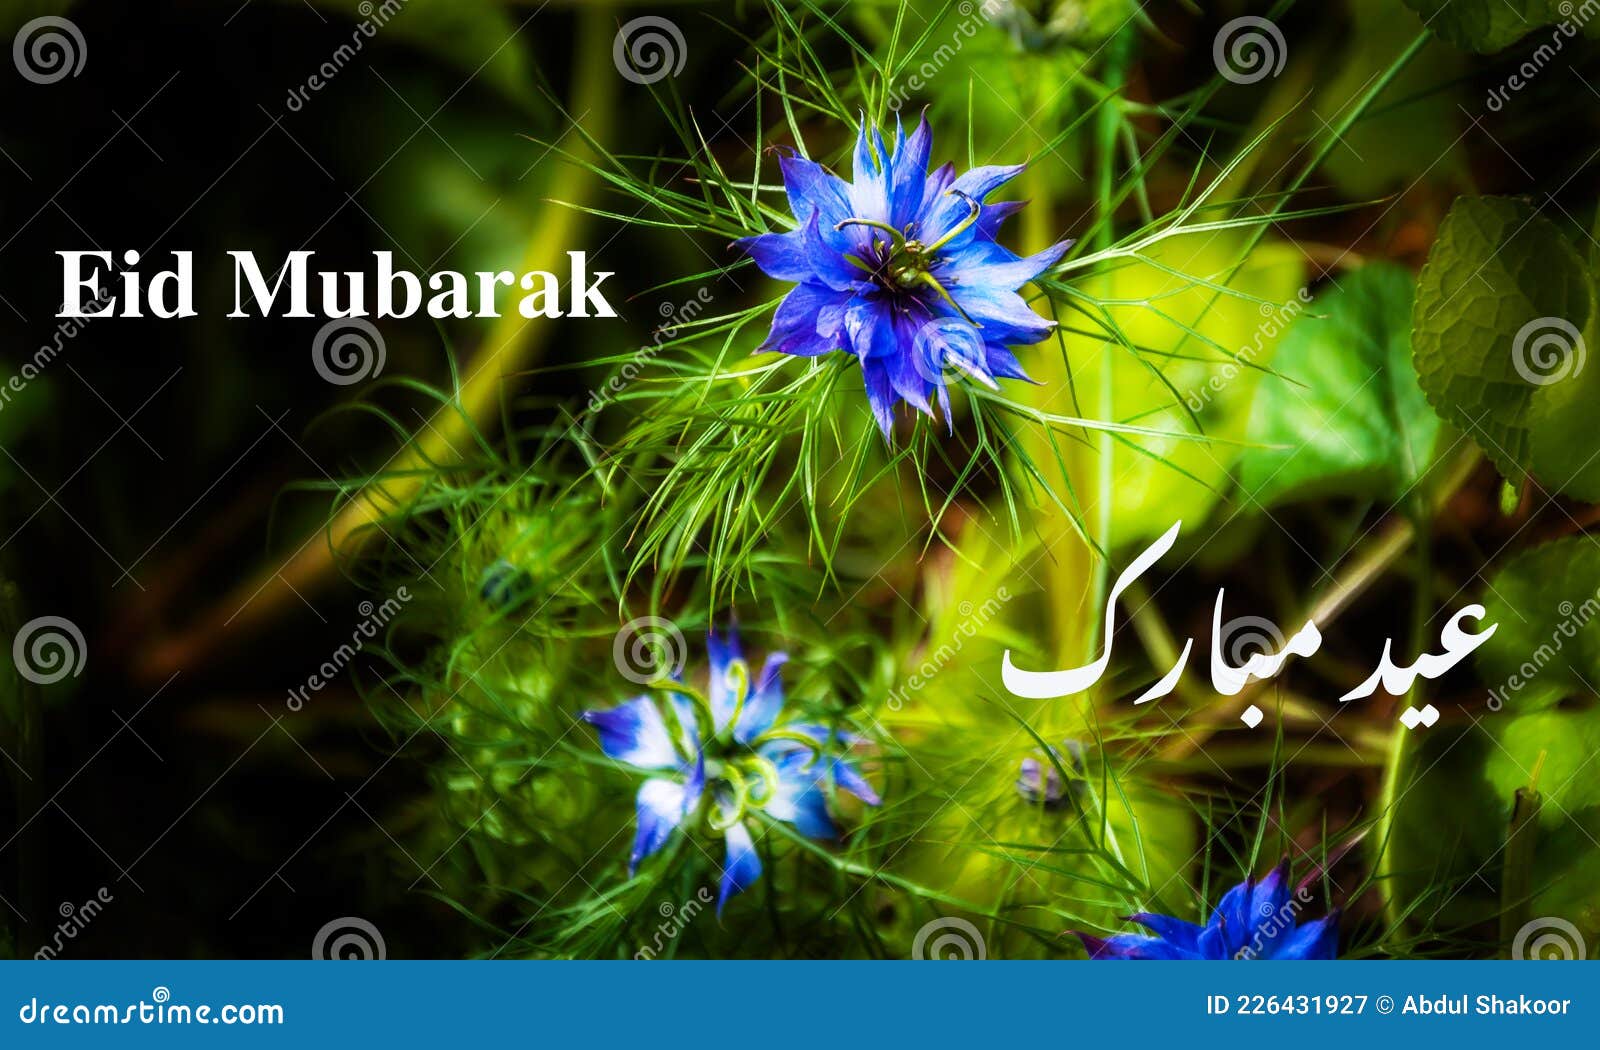 Urdu Eid Mubarak Card in Blue Flowers Stock Image - Image of ...